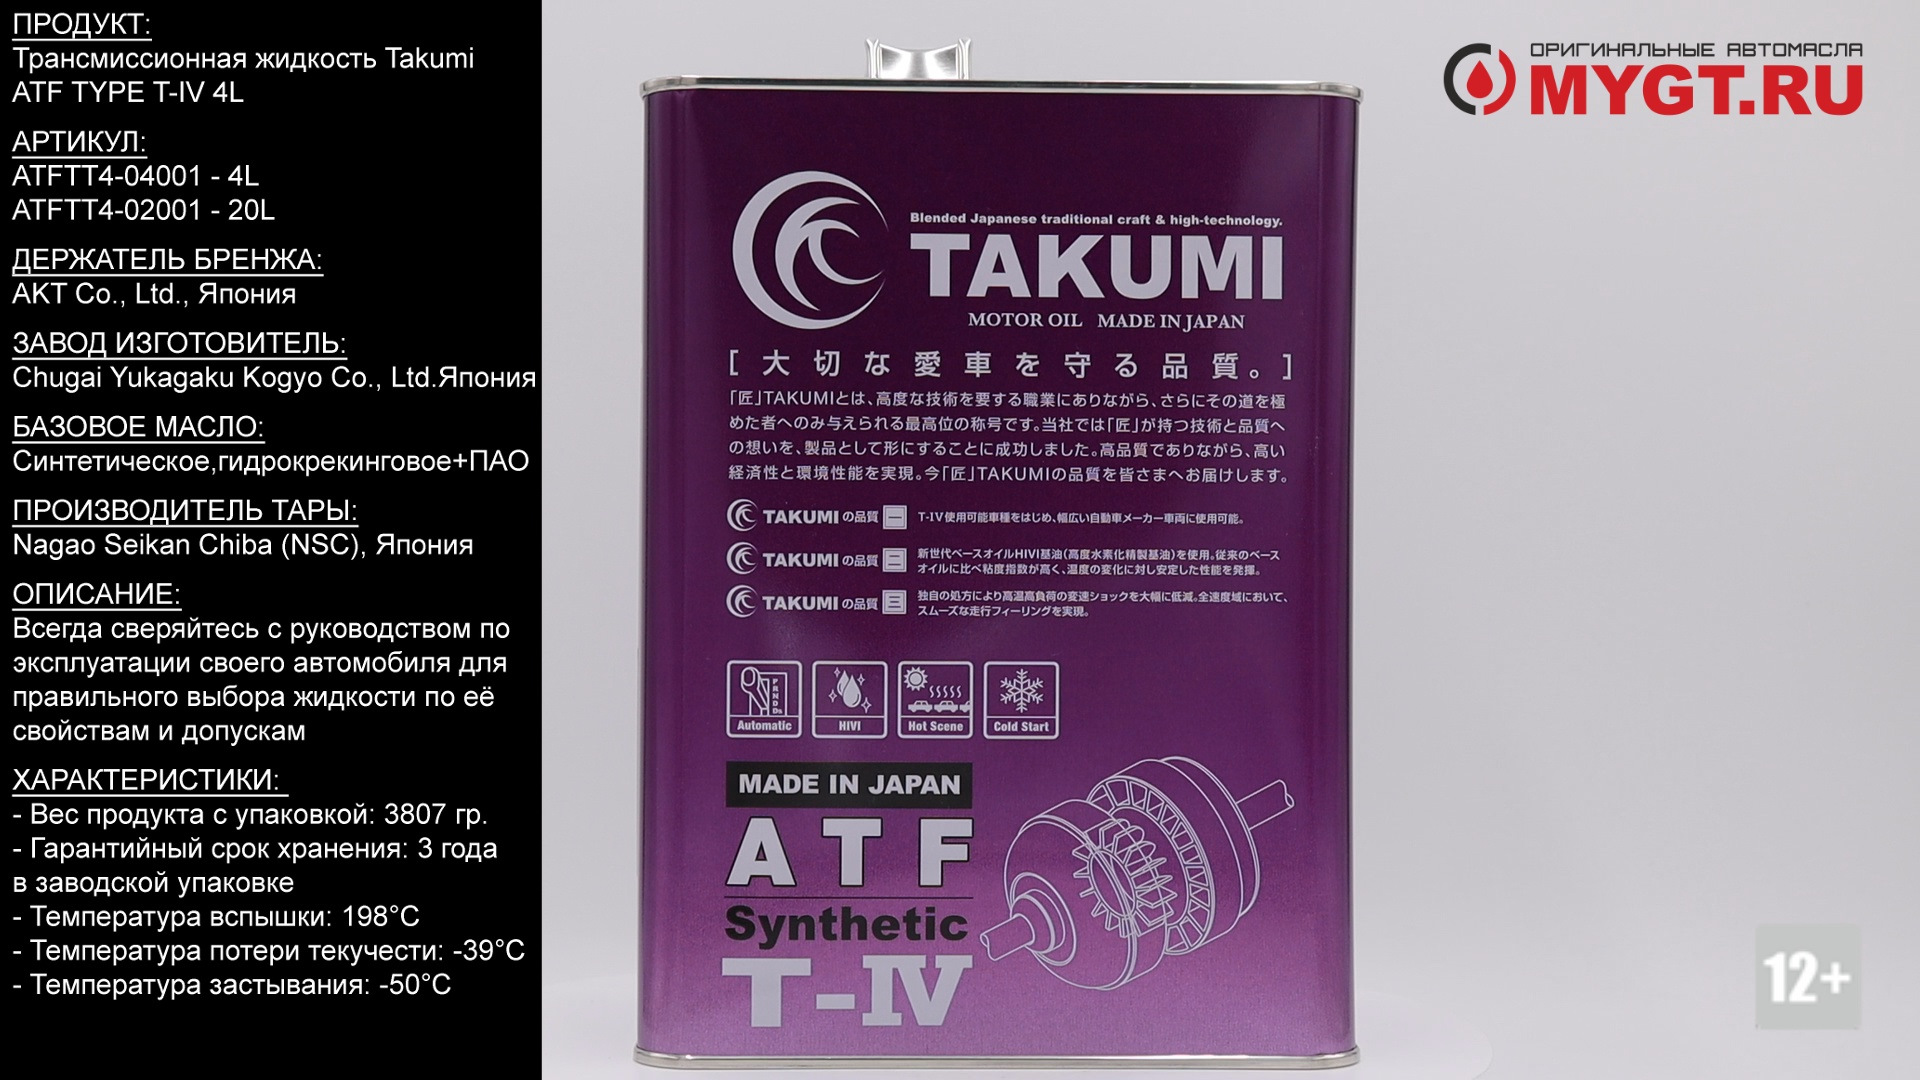 ATF Type t4 артикул. Toyota ATF Fluid t-IV (4.0). Жидкость в АКПП ATF Type t4. NGN ATF sp4.